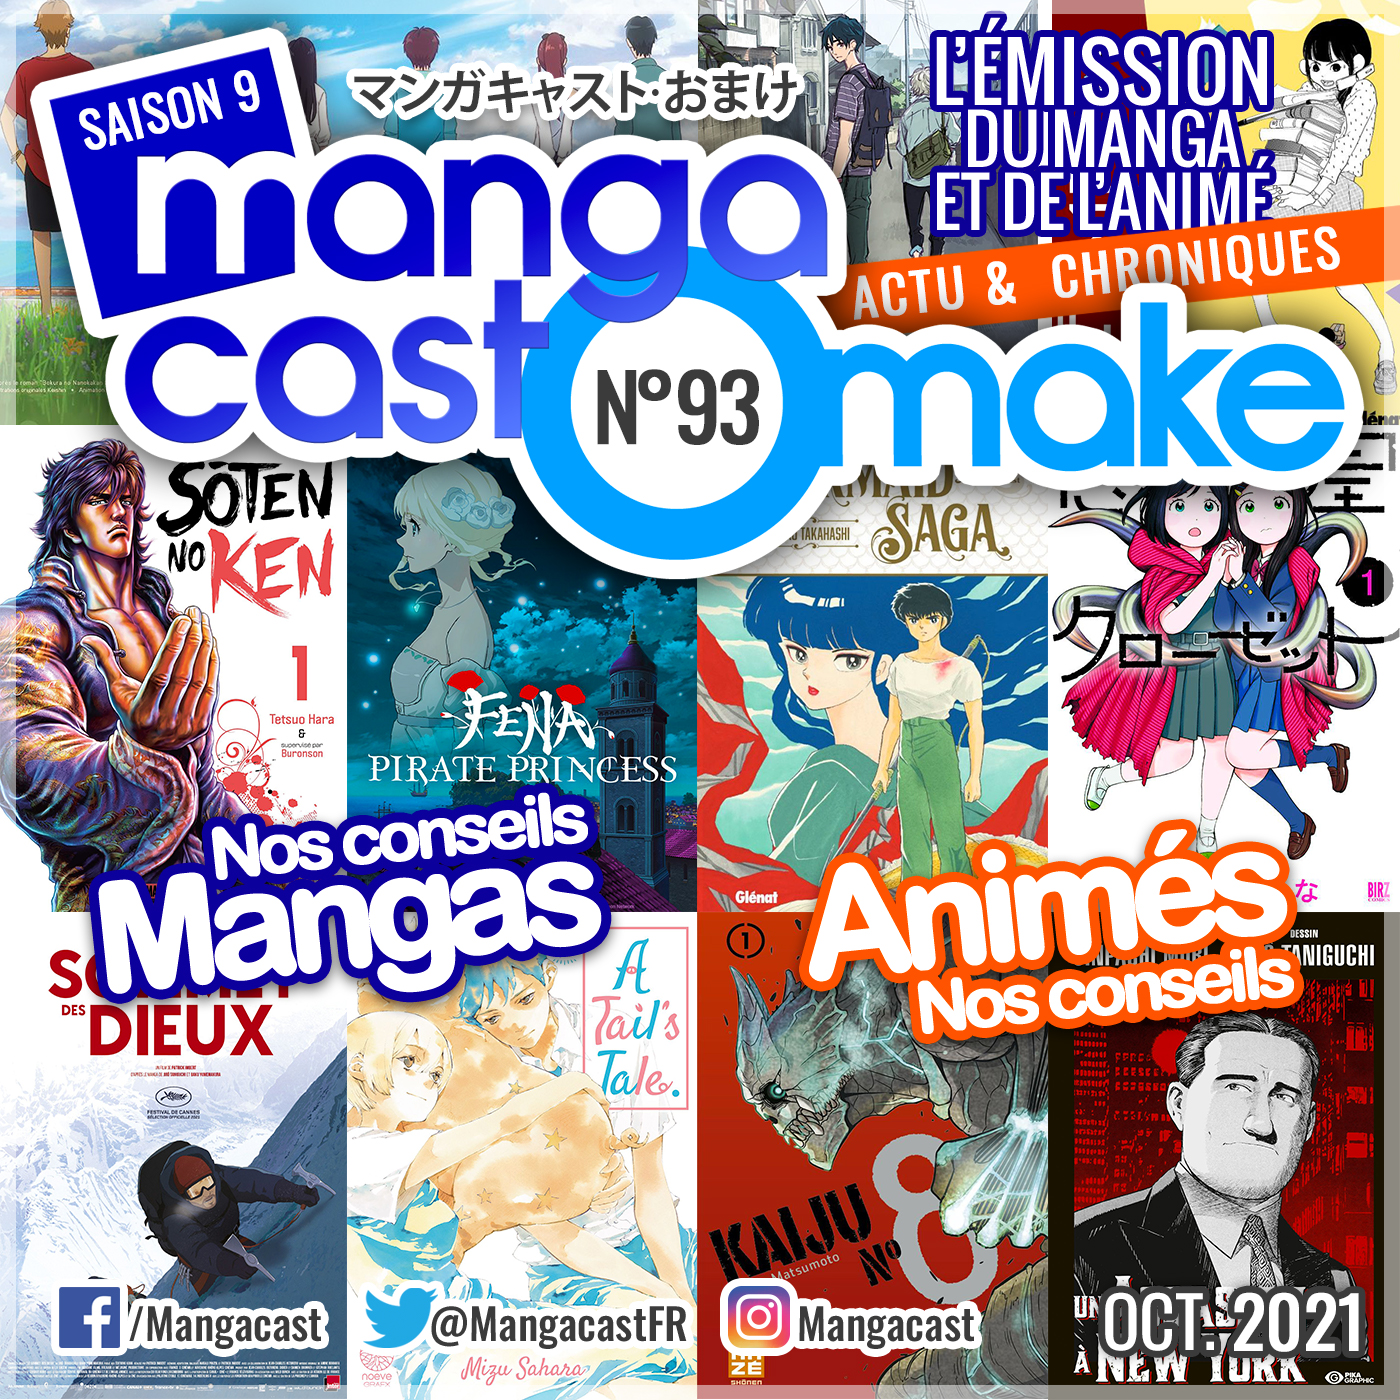 Cartouche du Mangacast Omake n°93